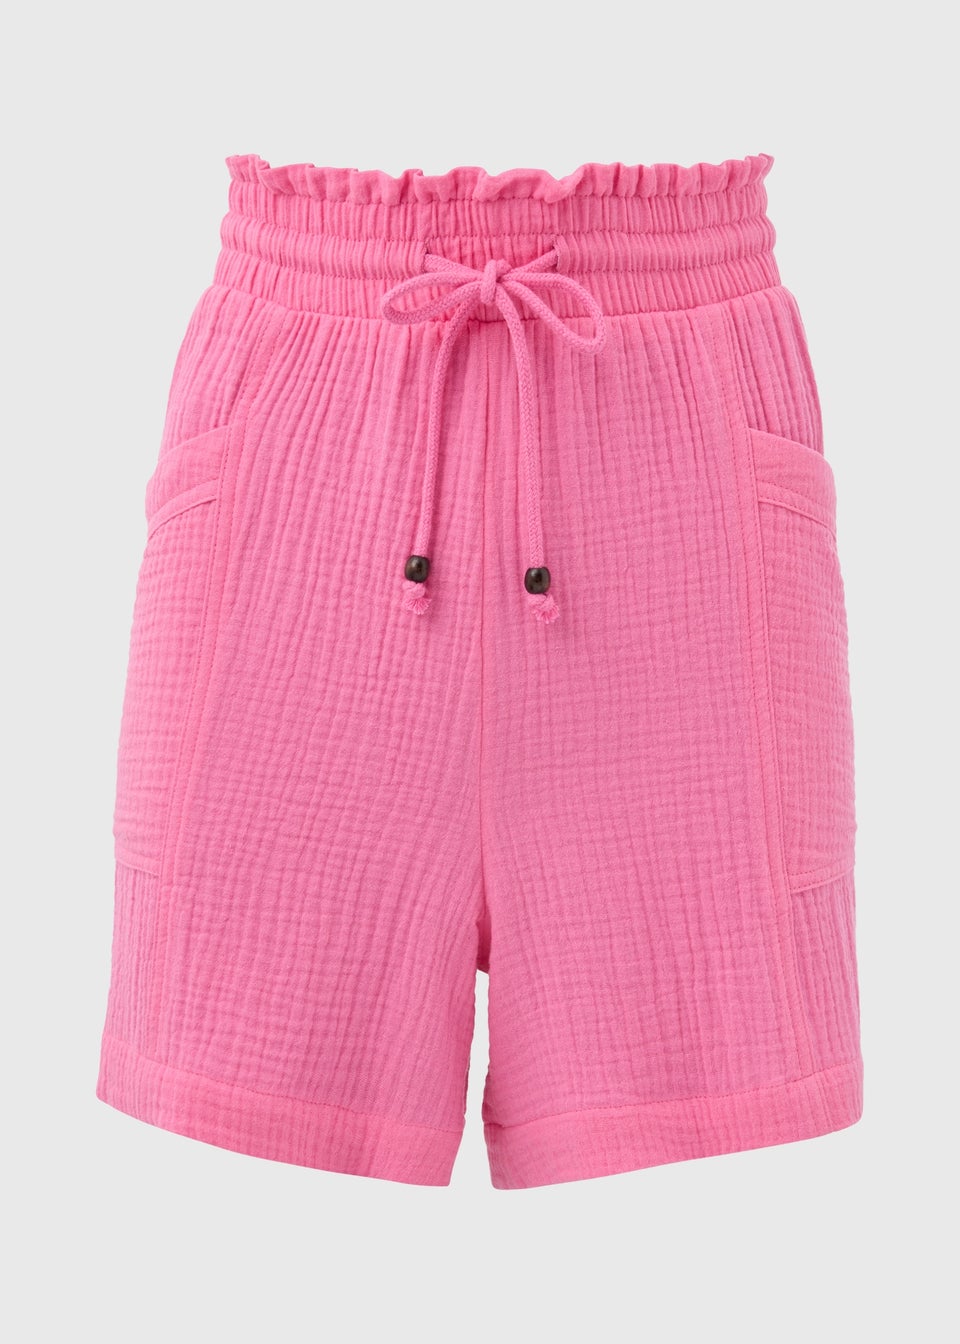 Pink Textured Shorts